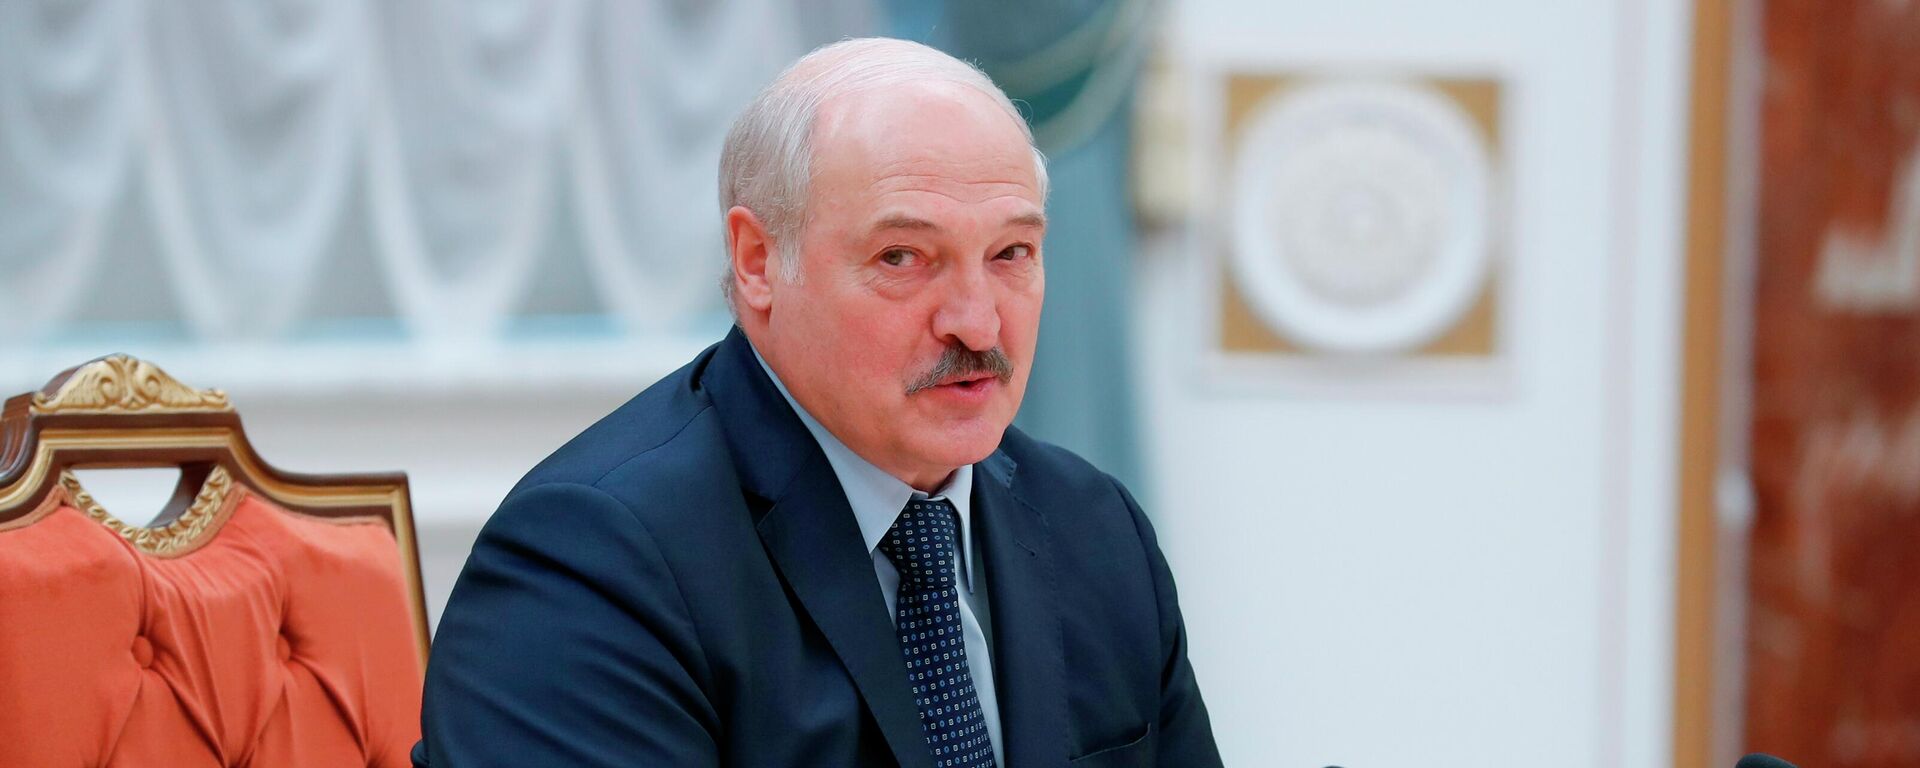 Baltarusijos prezidentas Aleksandras Lukašenka - Sputnik Lietuva, 1920, 22.07.2021